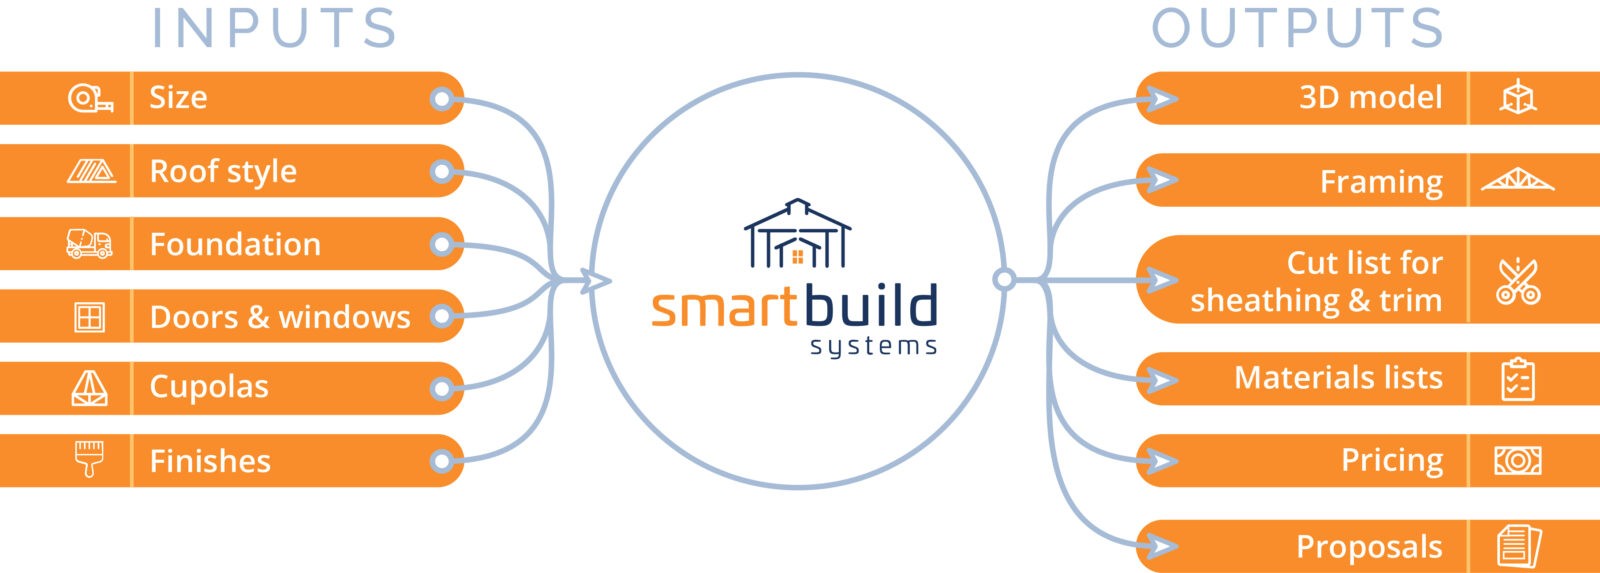 smartbuild outputs